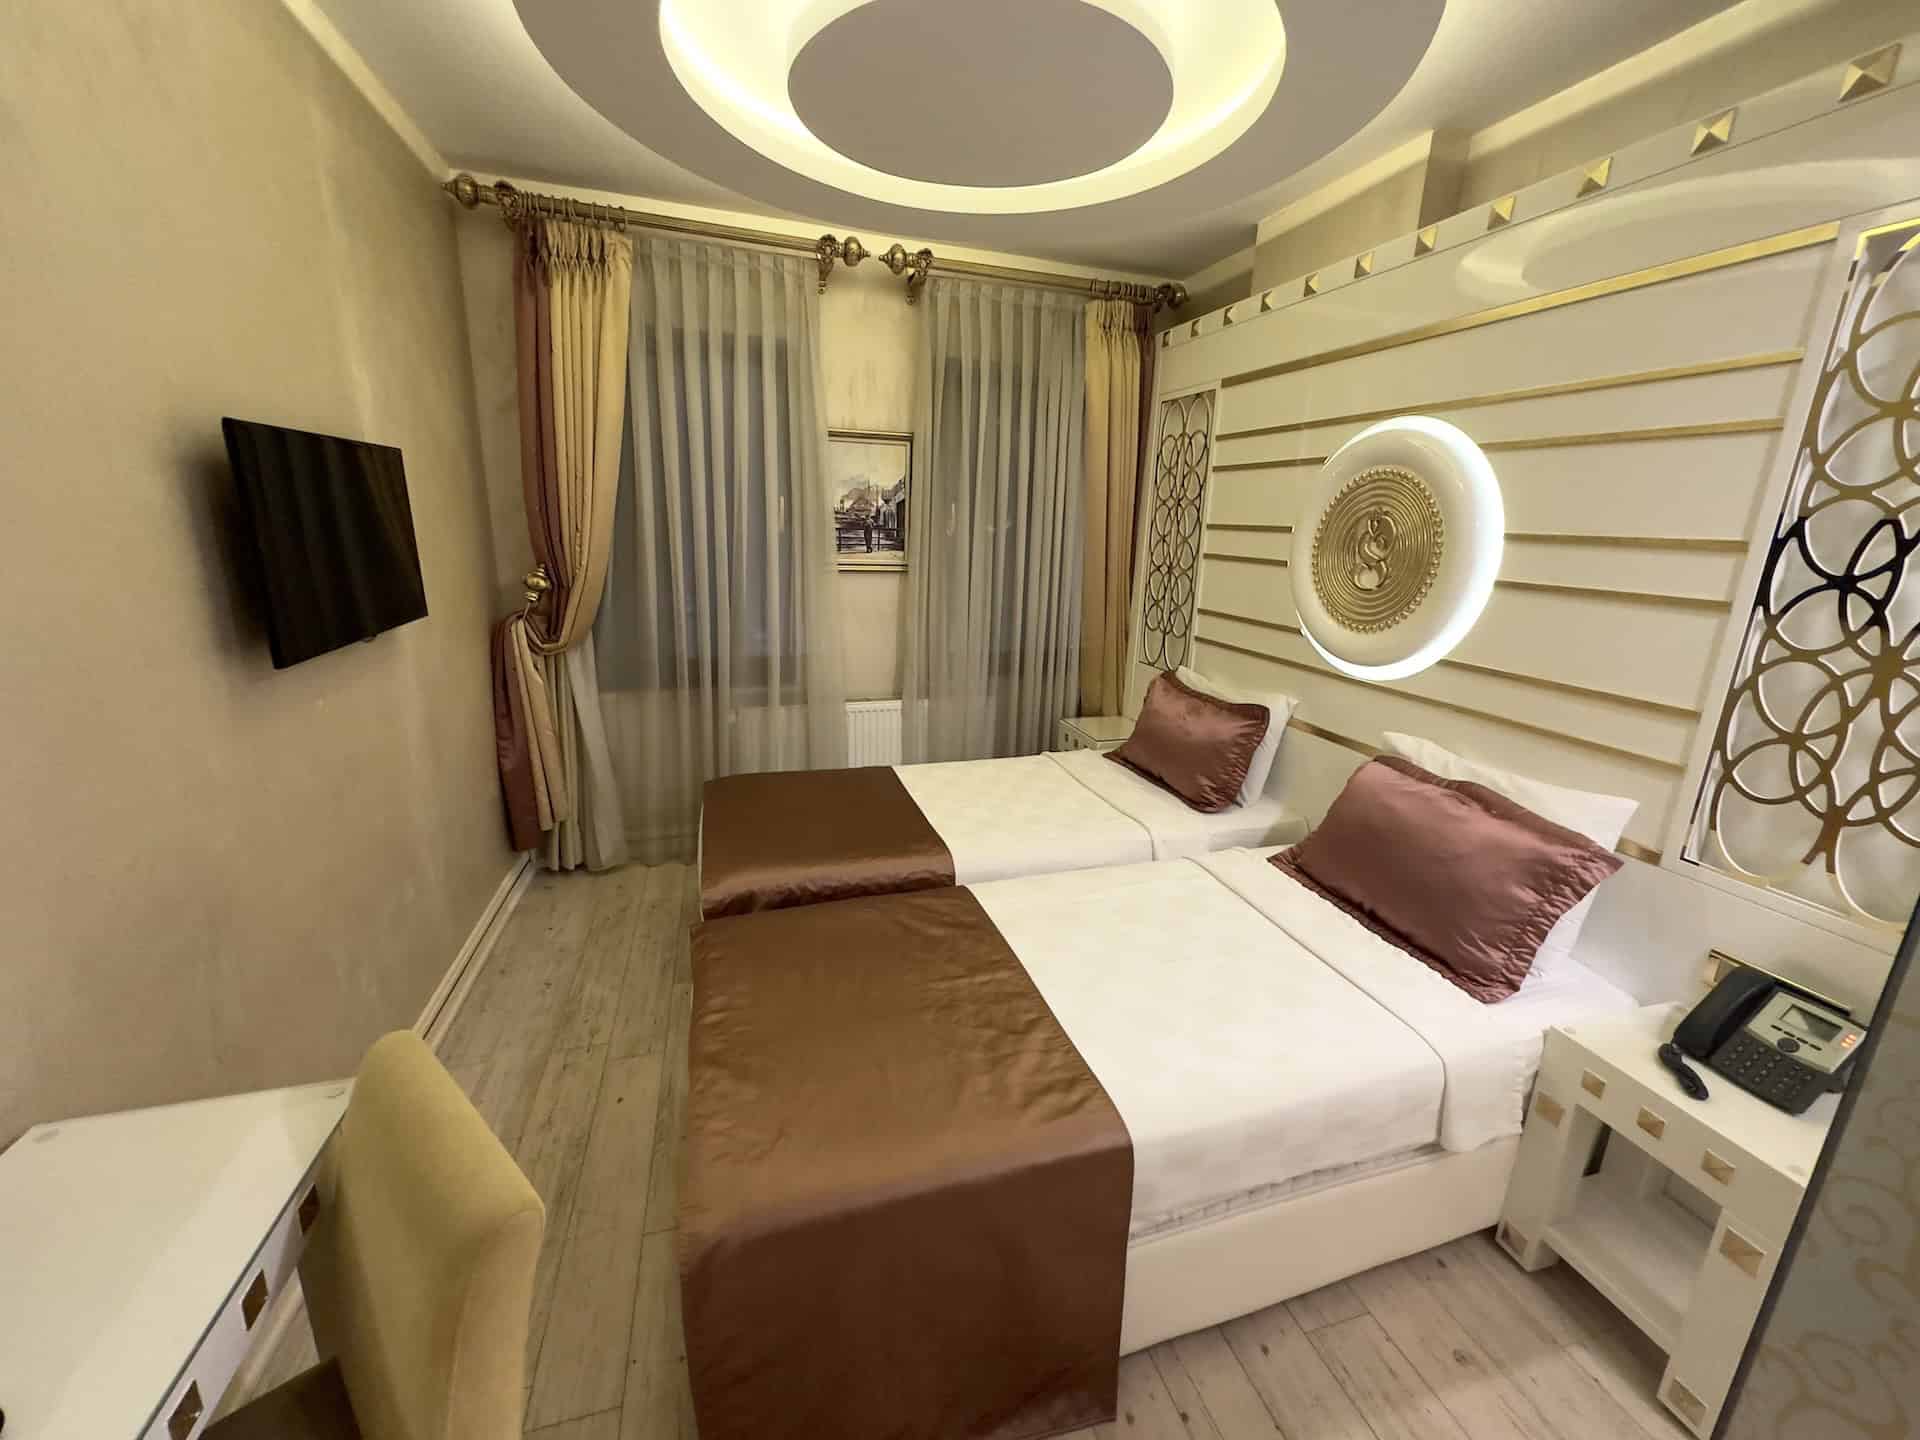 My room at the Million Stone Hotel in Sultanhamet, Istanbul, Turkey